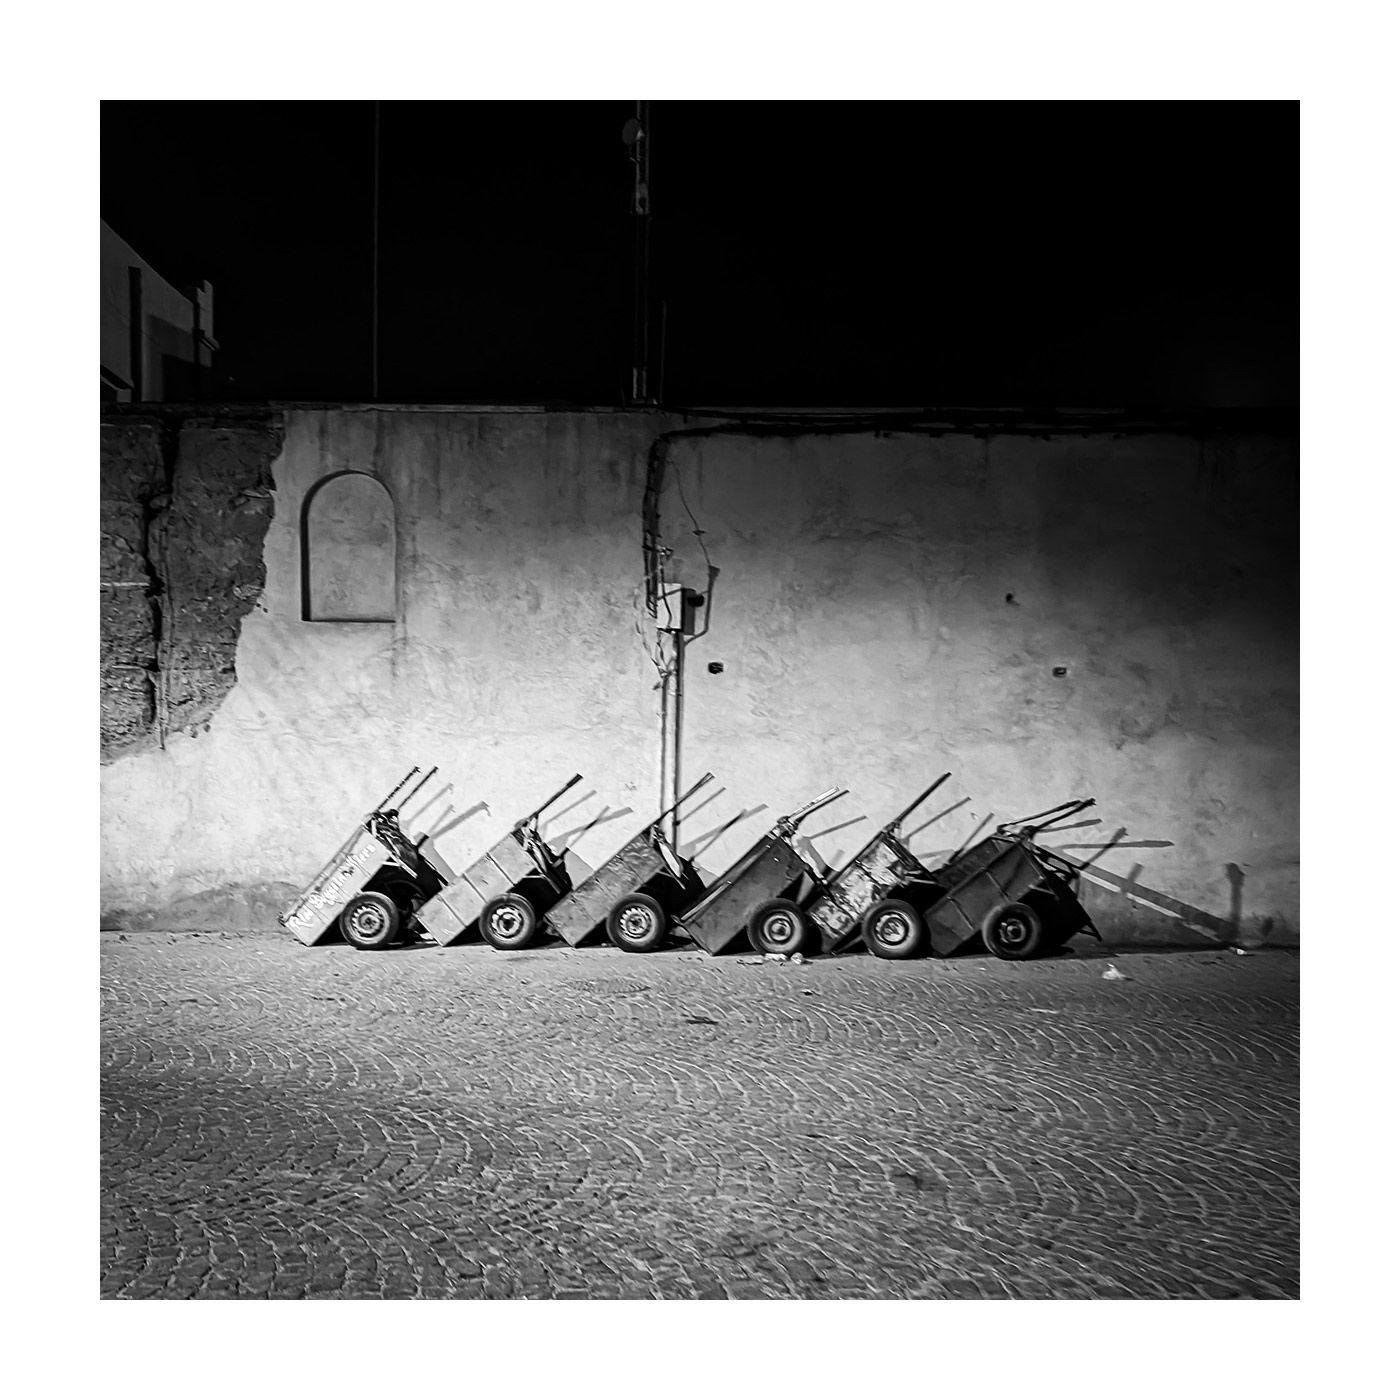 "Carts at Rest", Casbah, Marrakech, Apr 2024

#photography #casbah #marrakech #morroco #blackandwhite  #CasbahNight #NightPhotography #HistoricCasbah